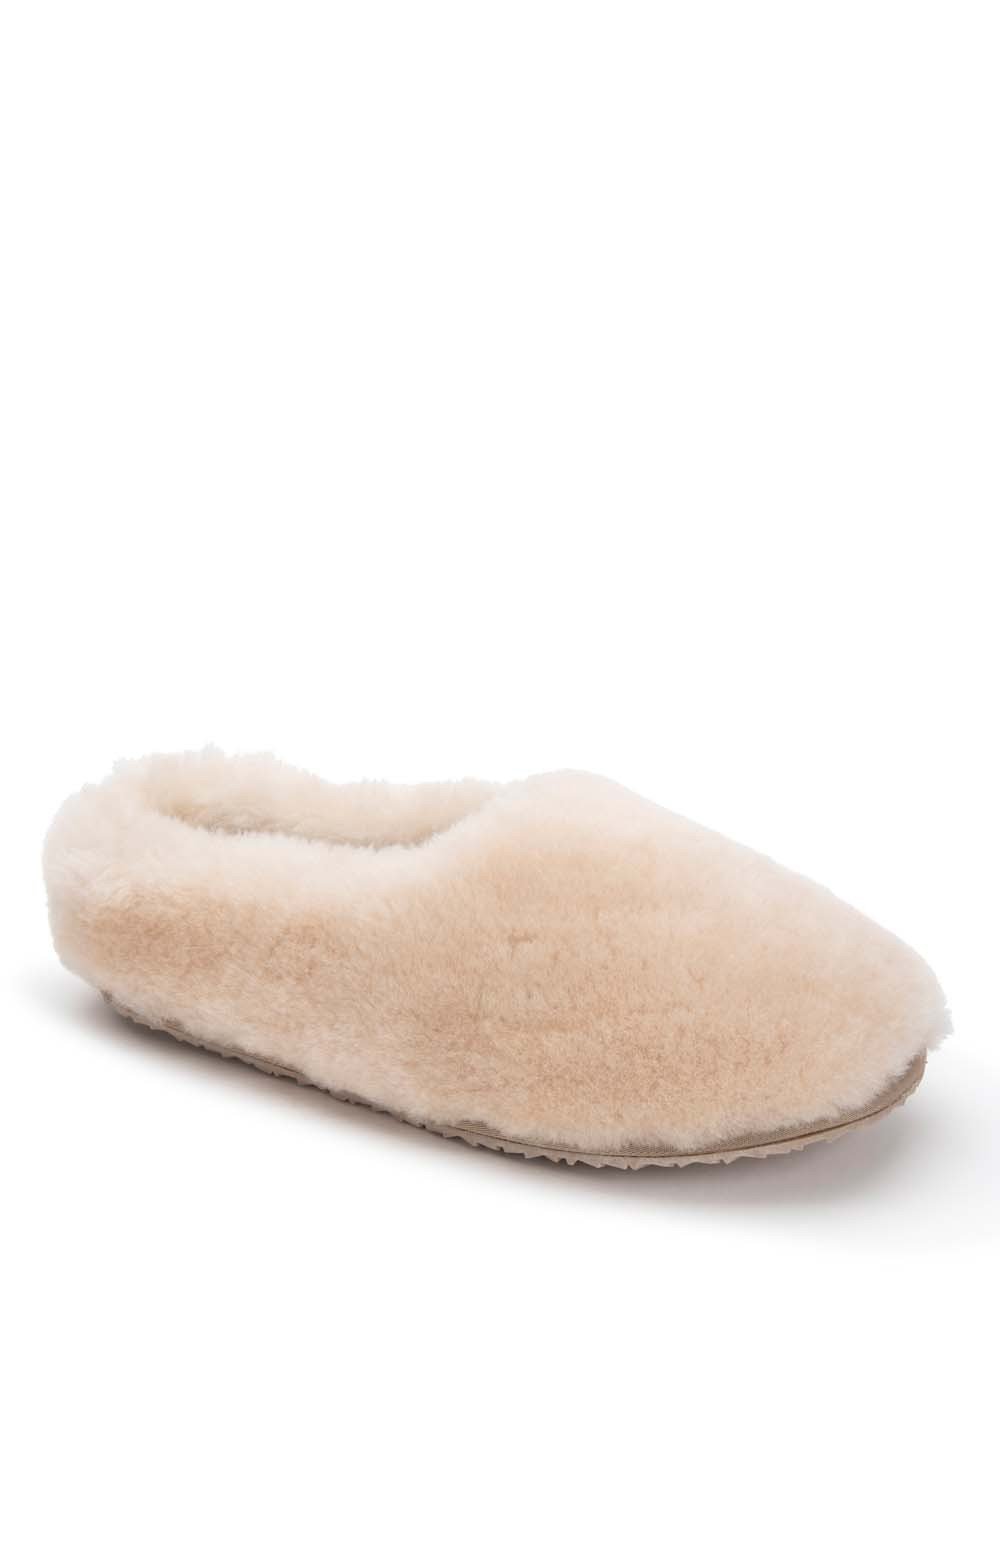 ladies sheepskin slippers sale